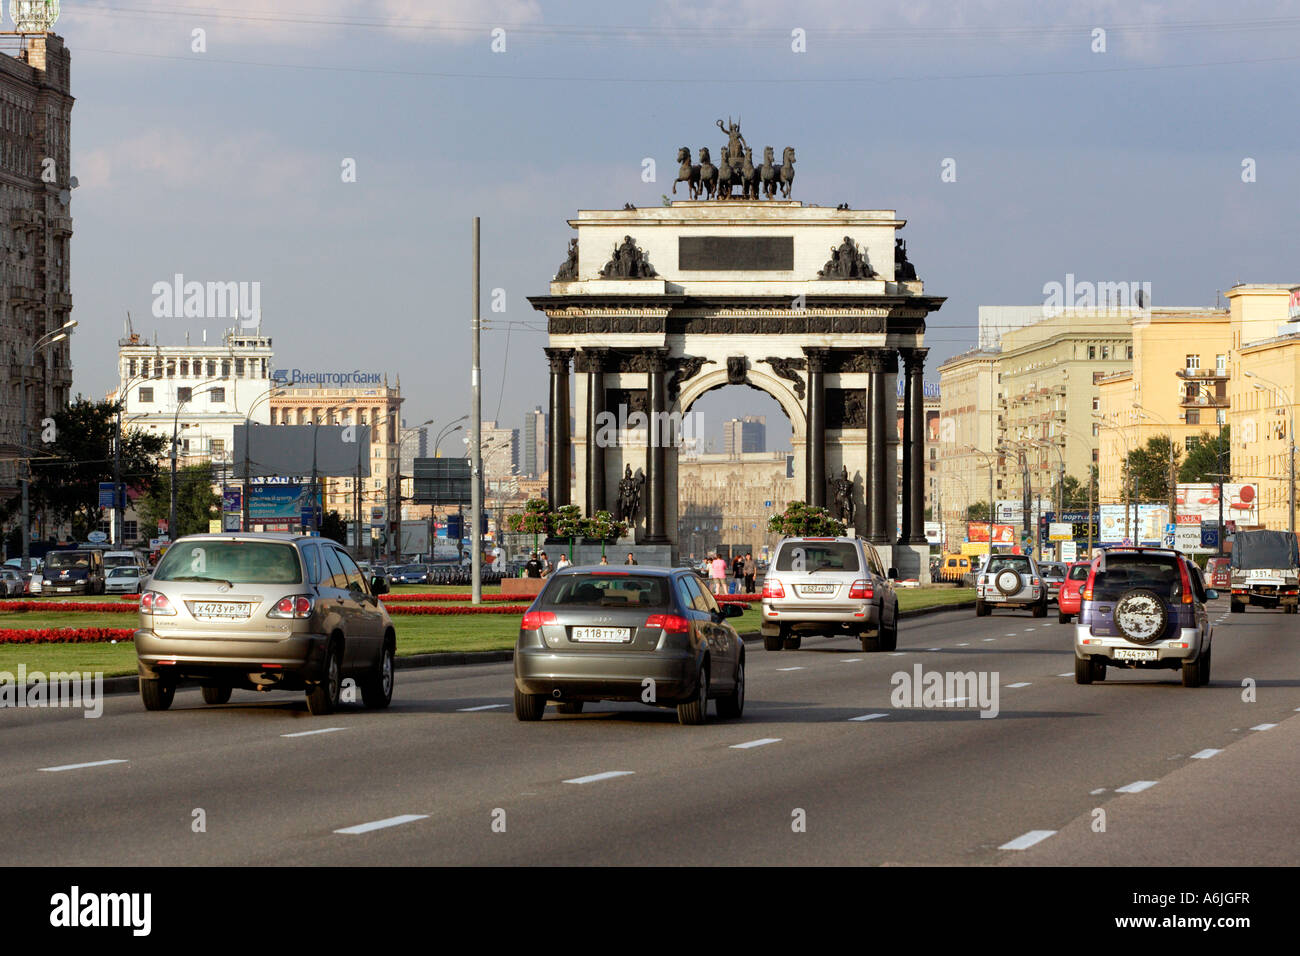 El arco triunfal en la colina Poklonnaya, Moscú, Rusia Foto de stock